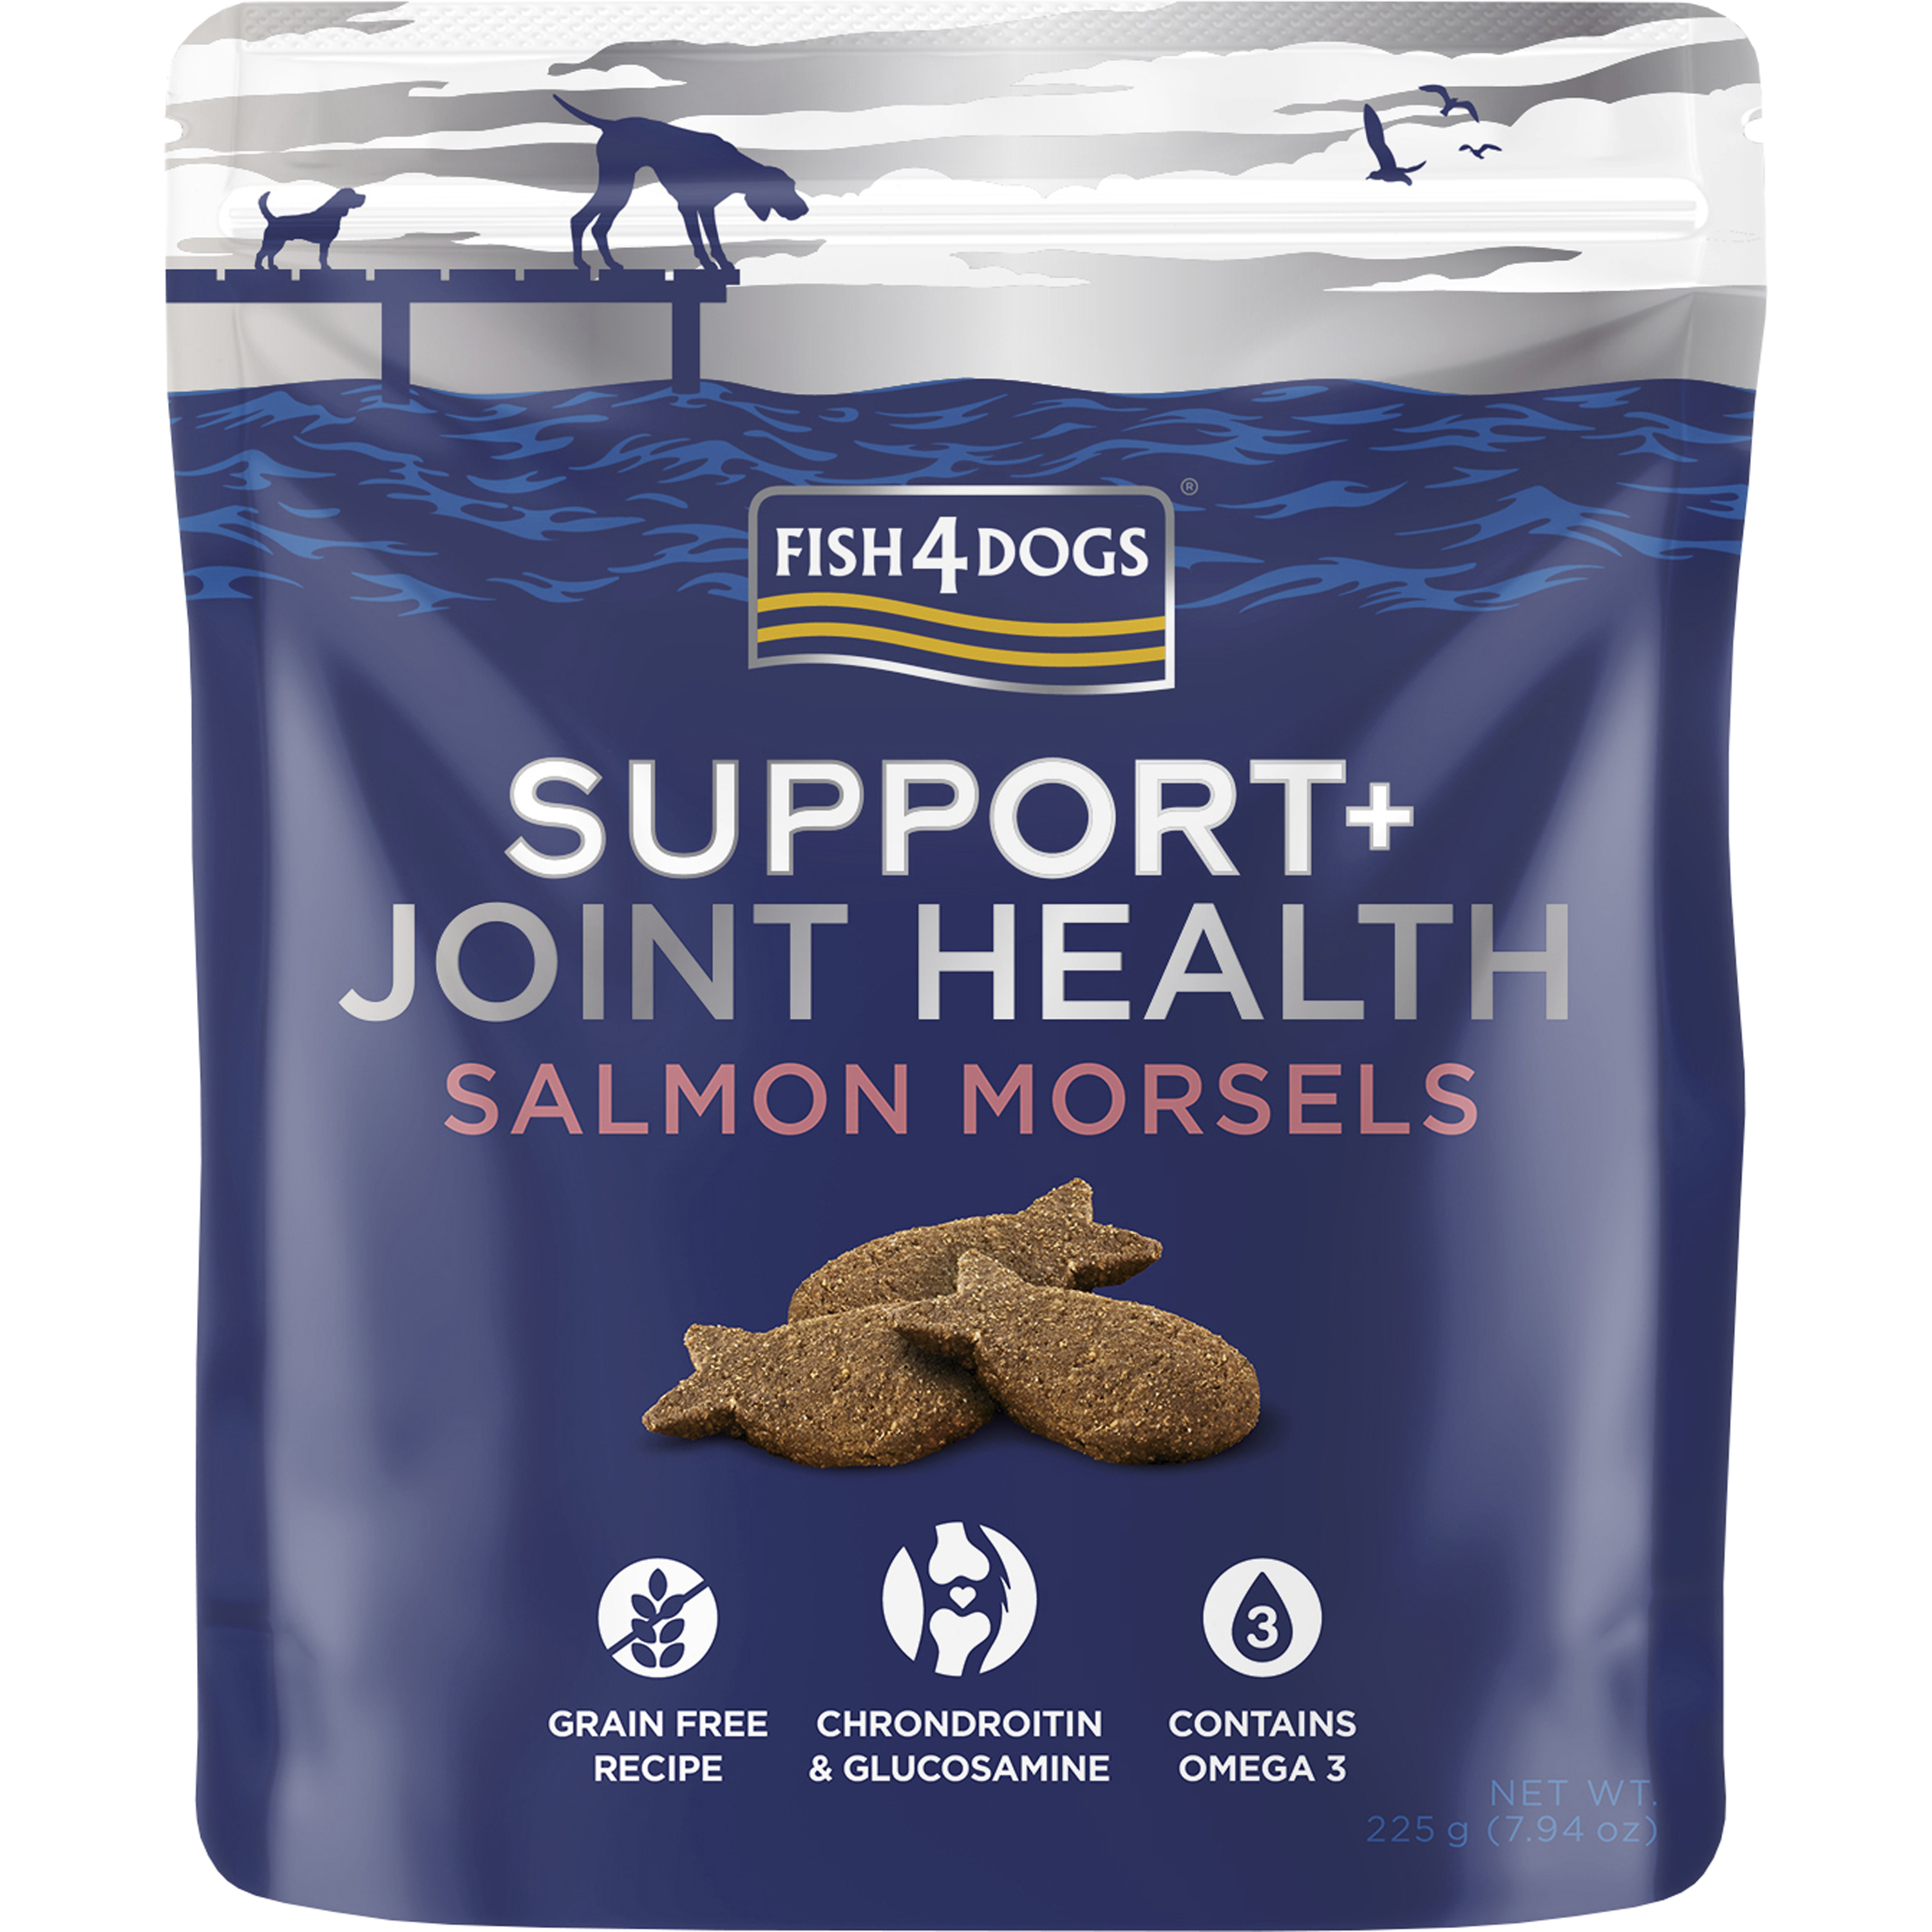 Hundgodis Fish4Dogs Support+ Joint Health 225 g